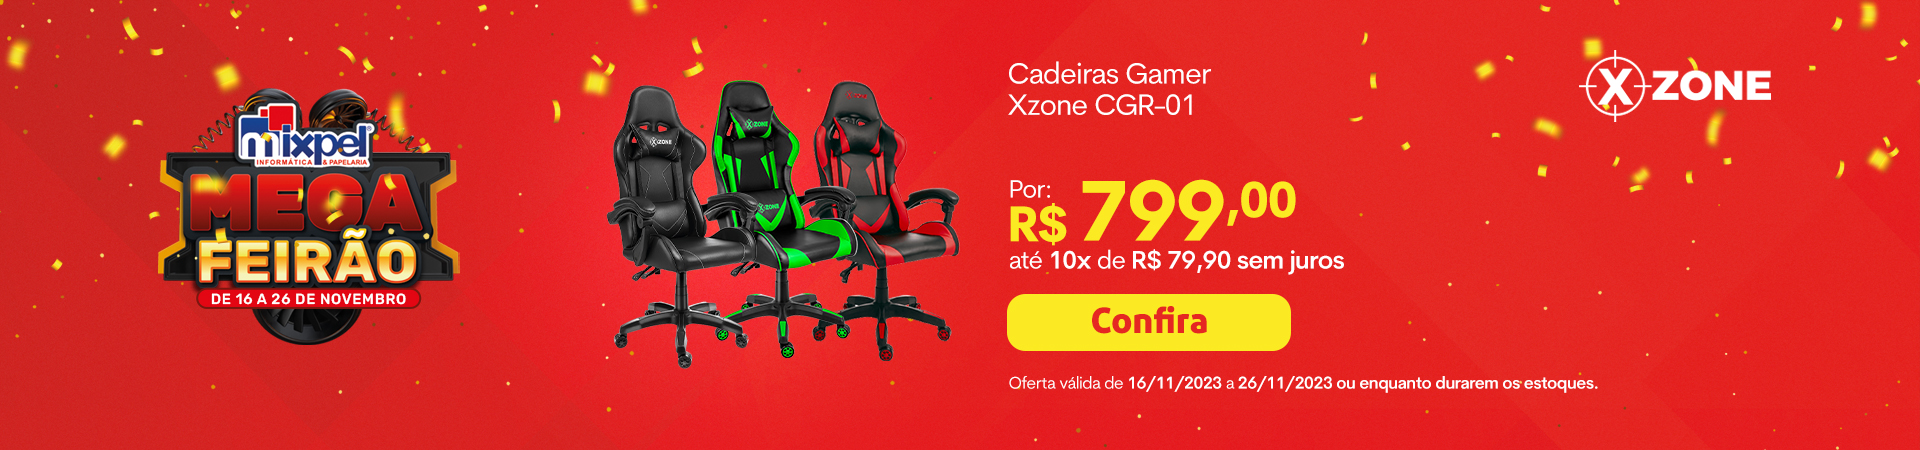 Cadeiras Gamer CGR-01